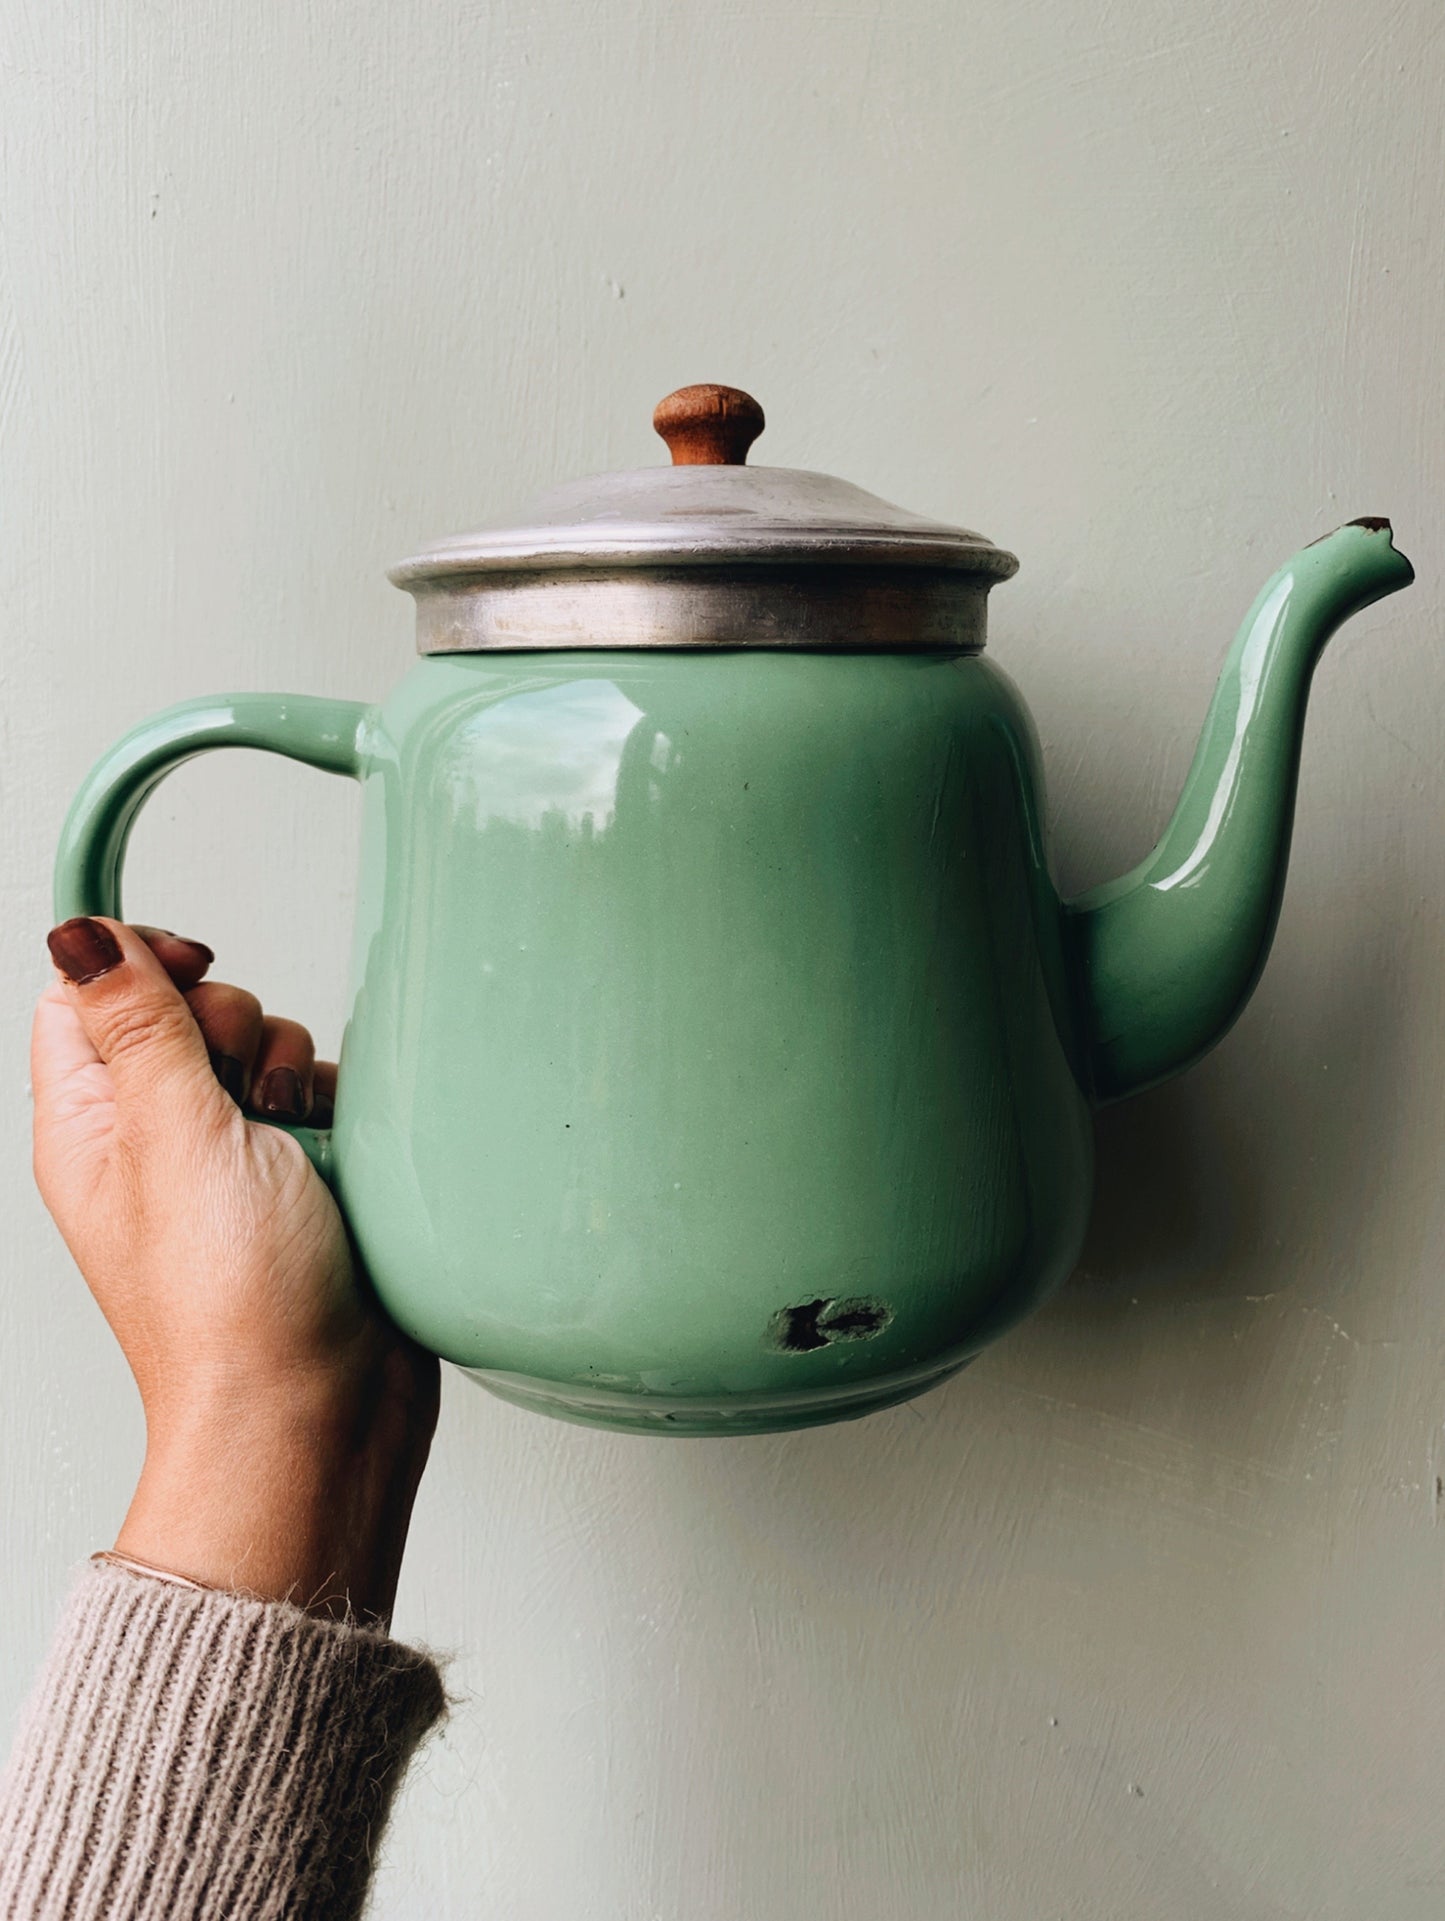 Rustic Vintage Green Enamel Teapot